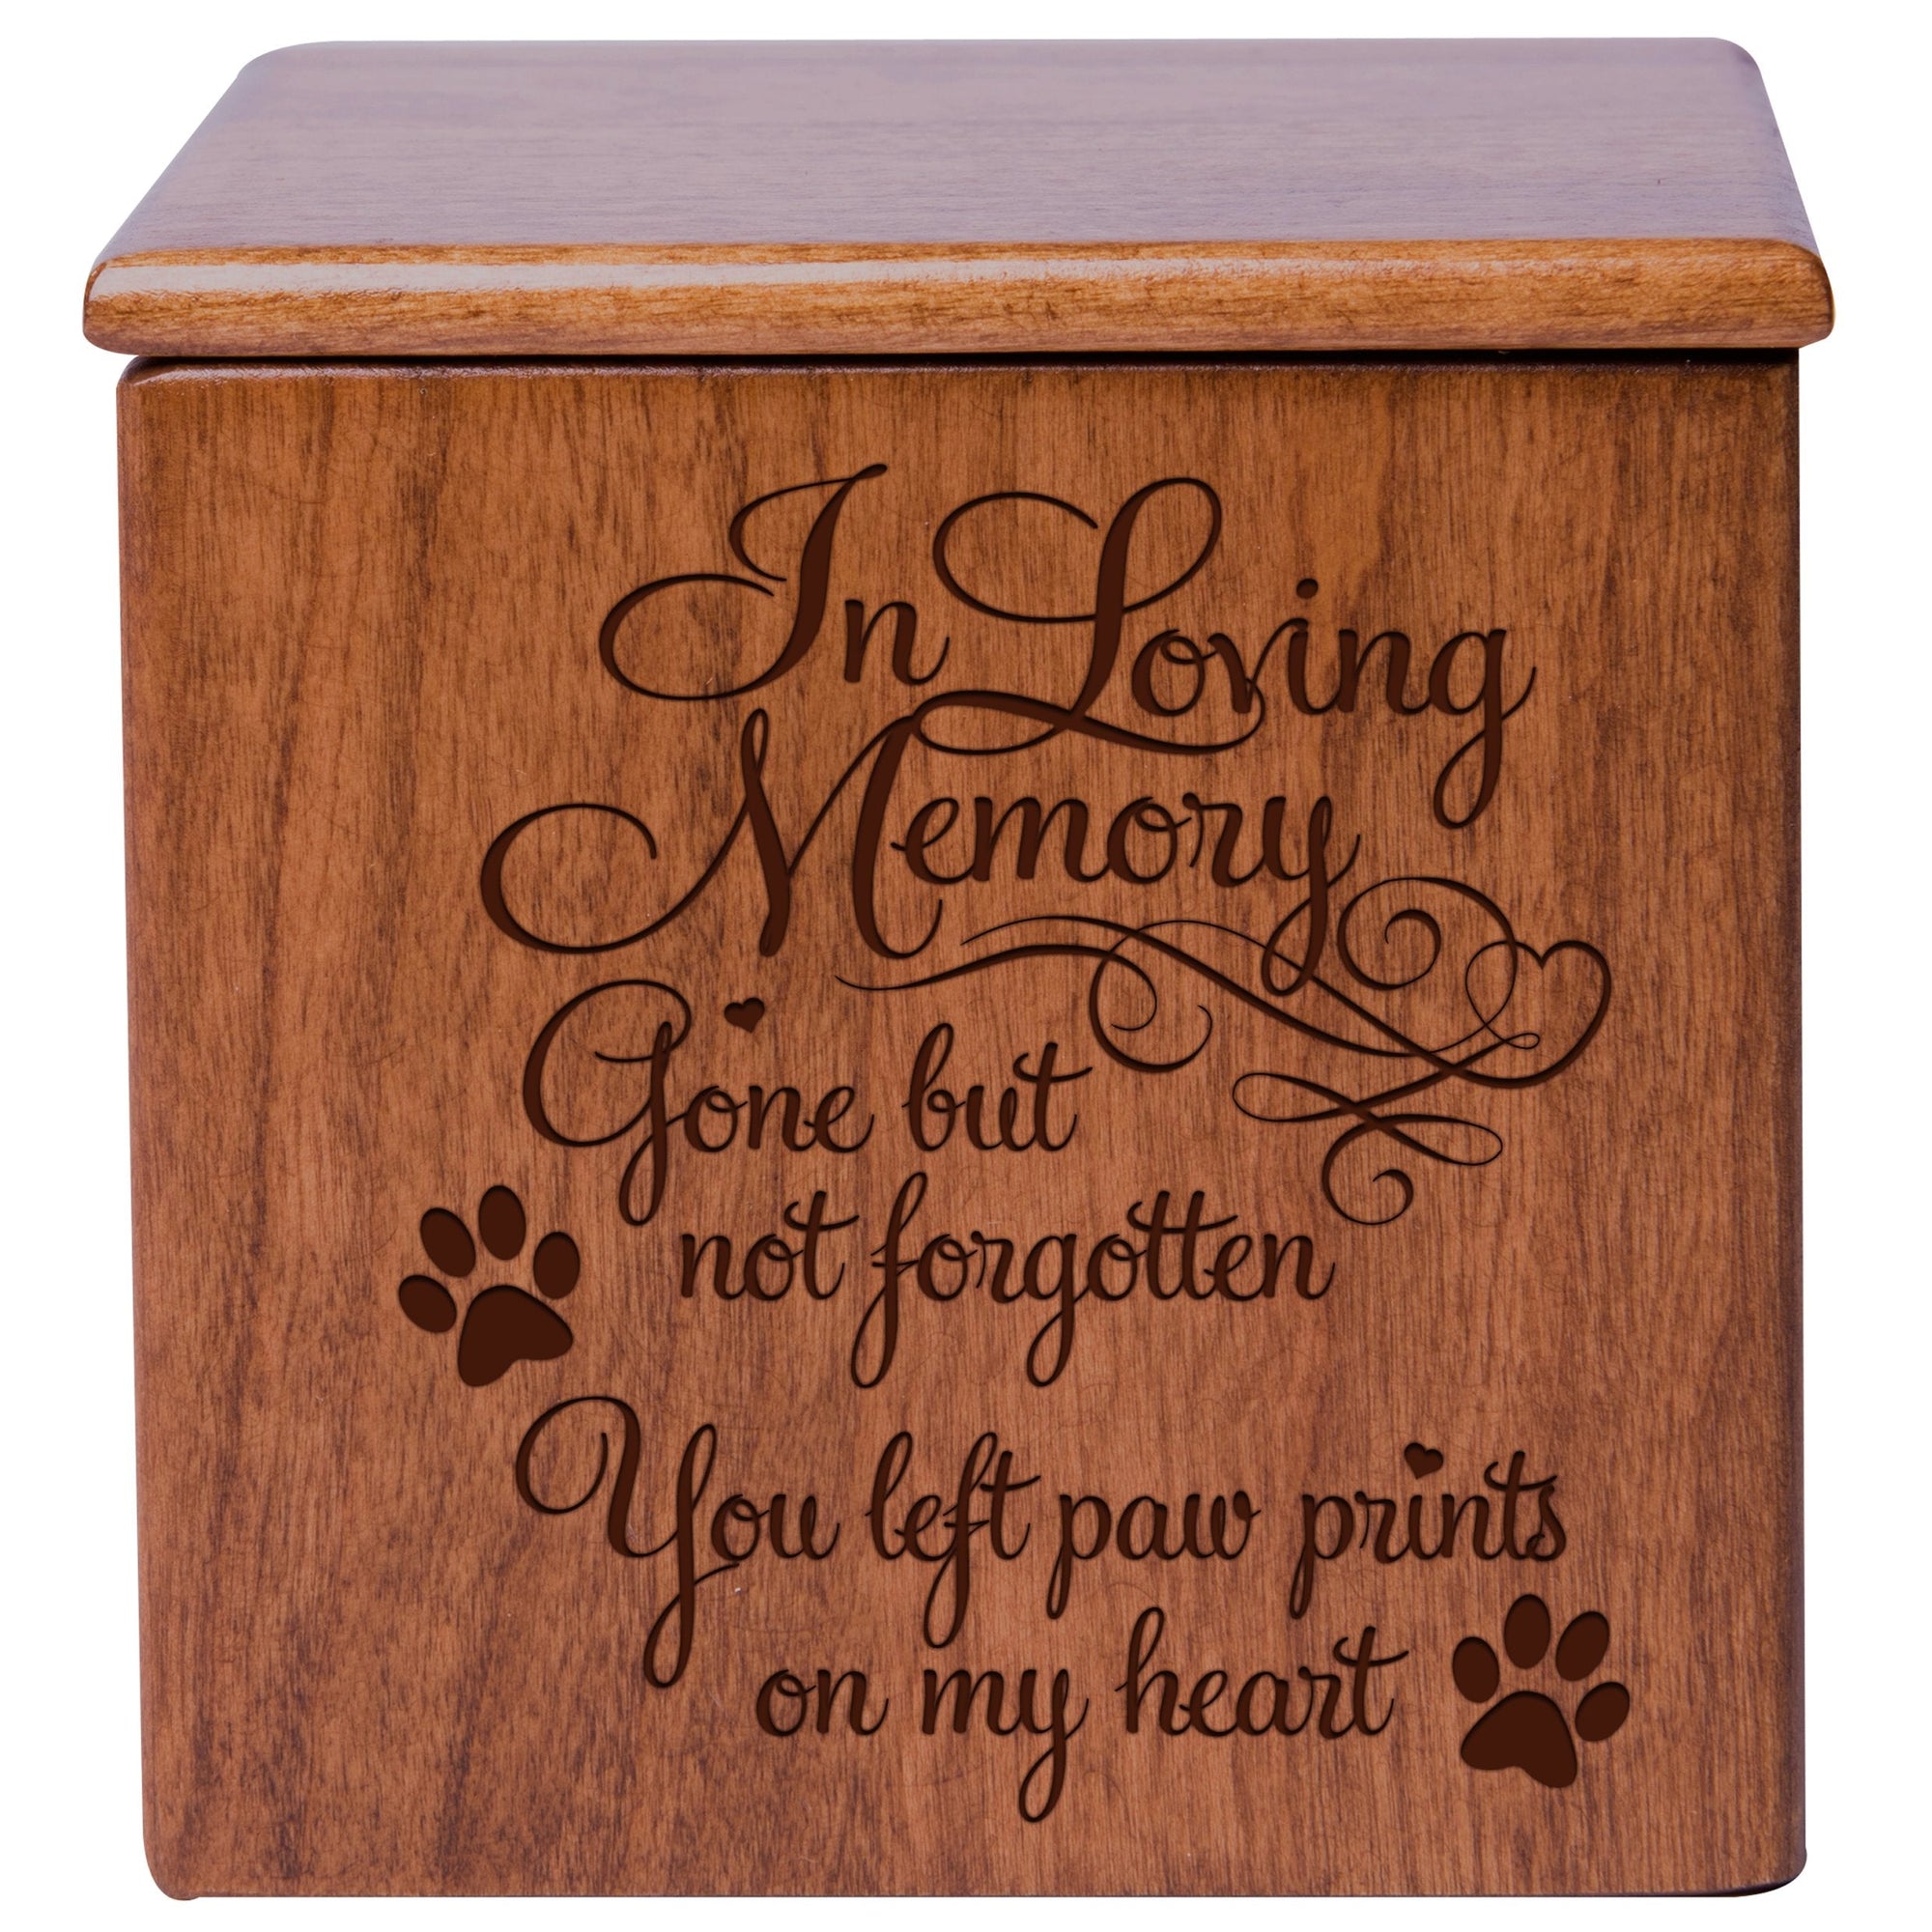 Cherry Pet Memorial 3.5x3.5 Keepsake Urn with phrase "Gone But Not Forgotten"